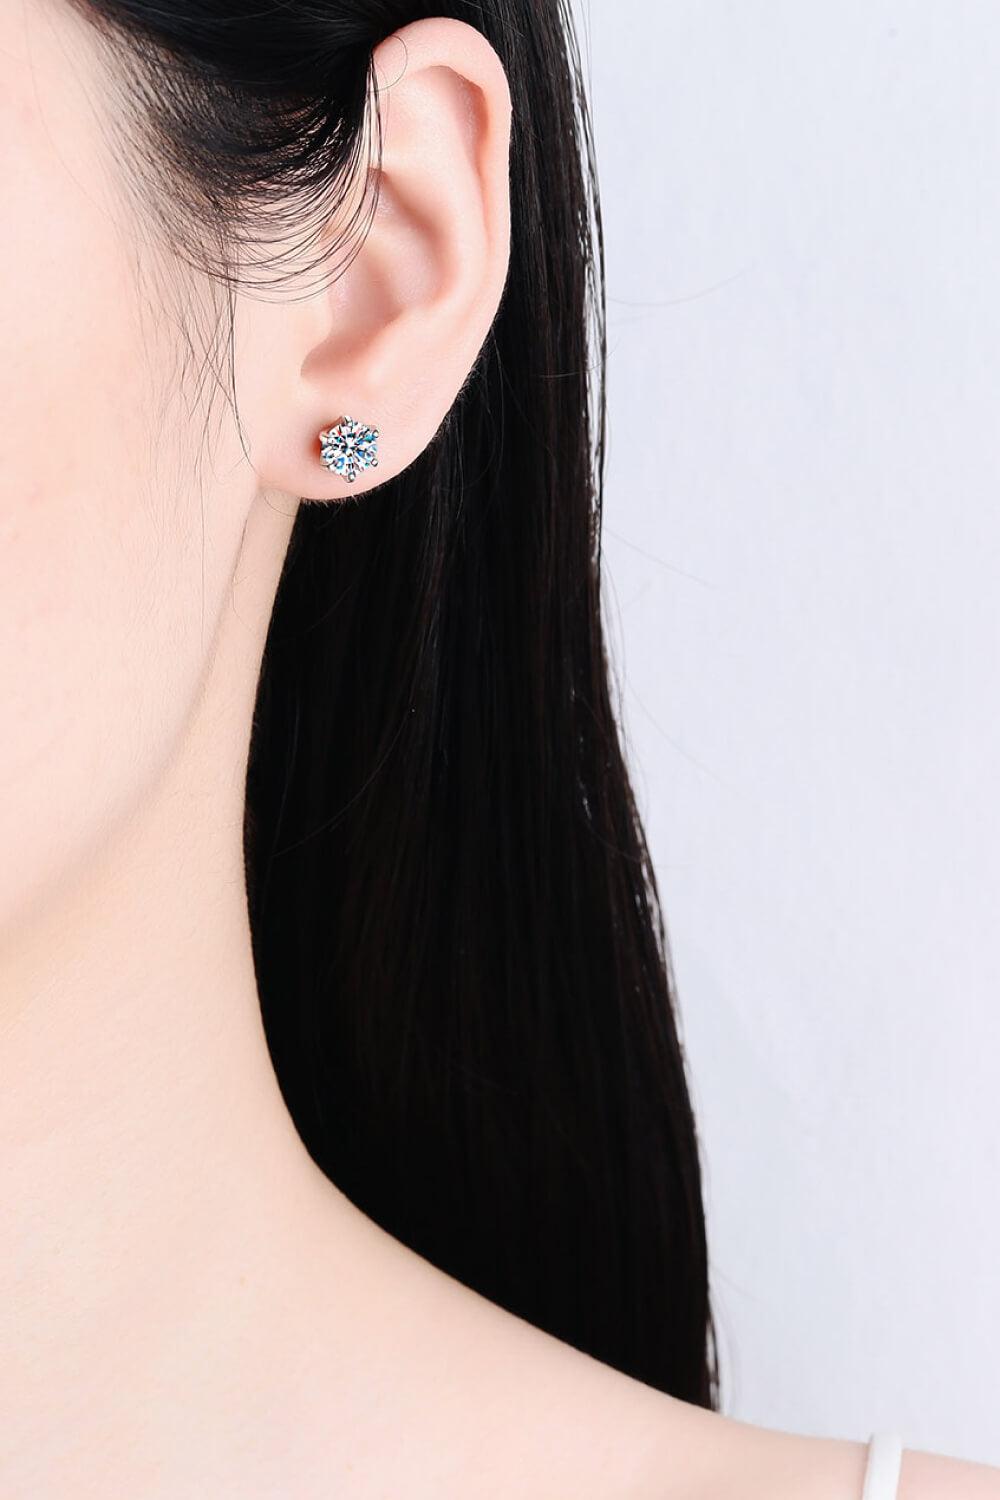 2 Carat Inlaid Moissanite Stud Earrings - Flyclothing LLC